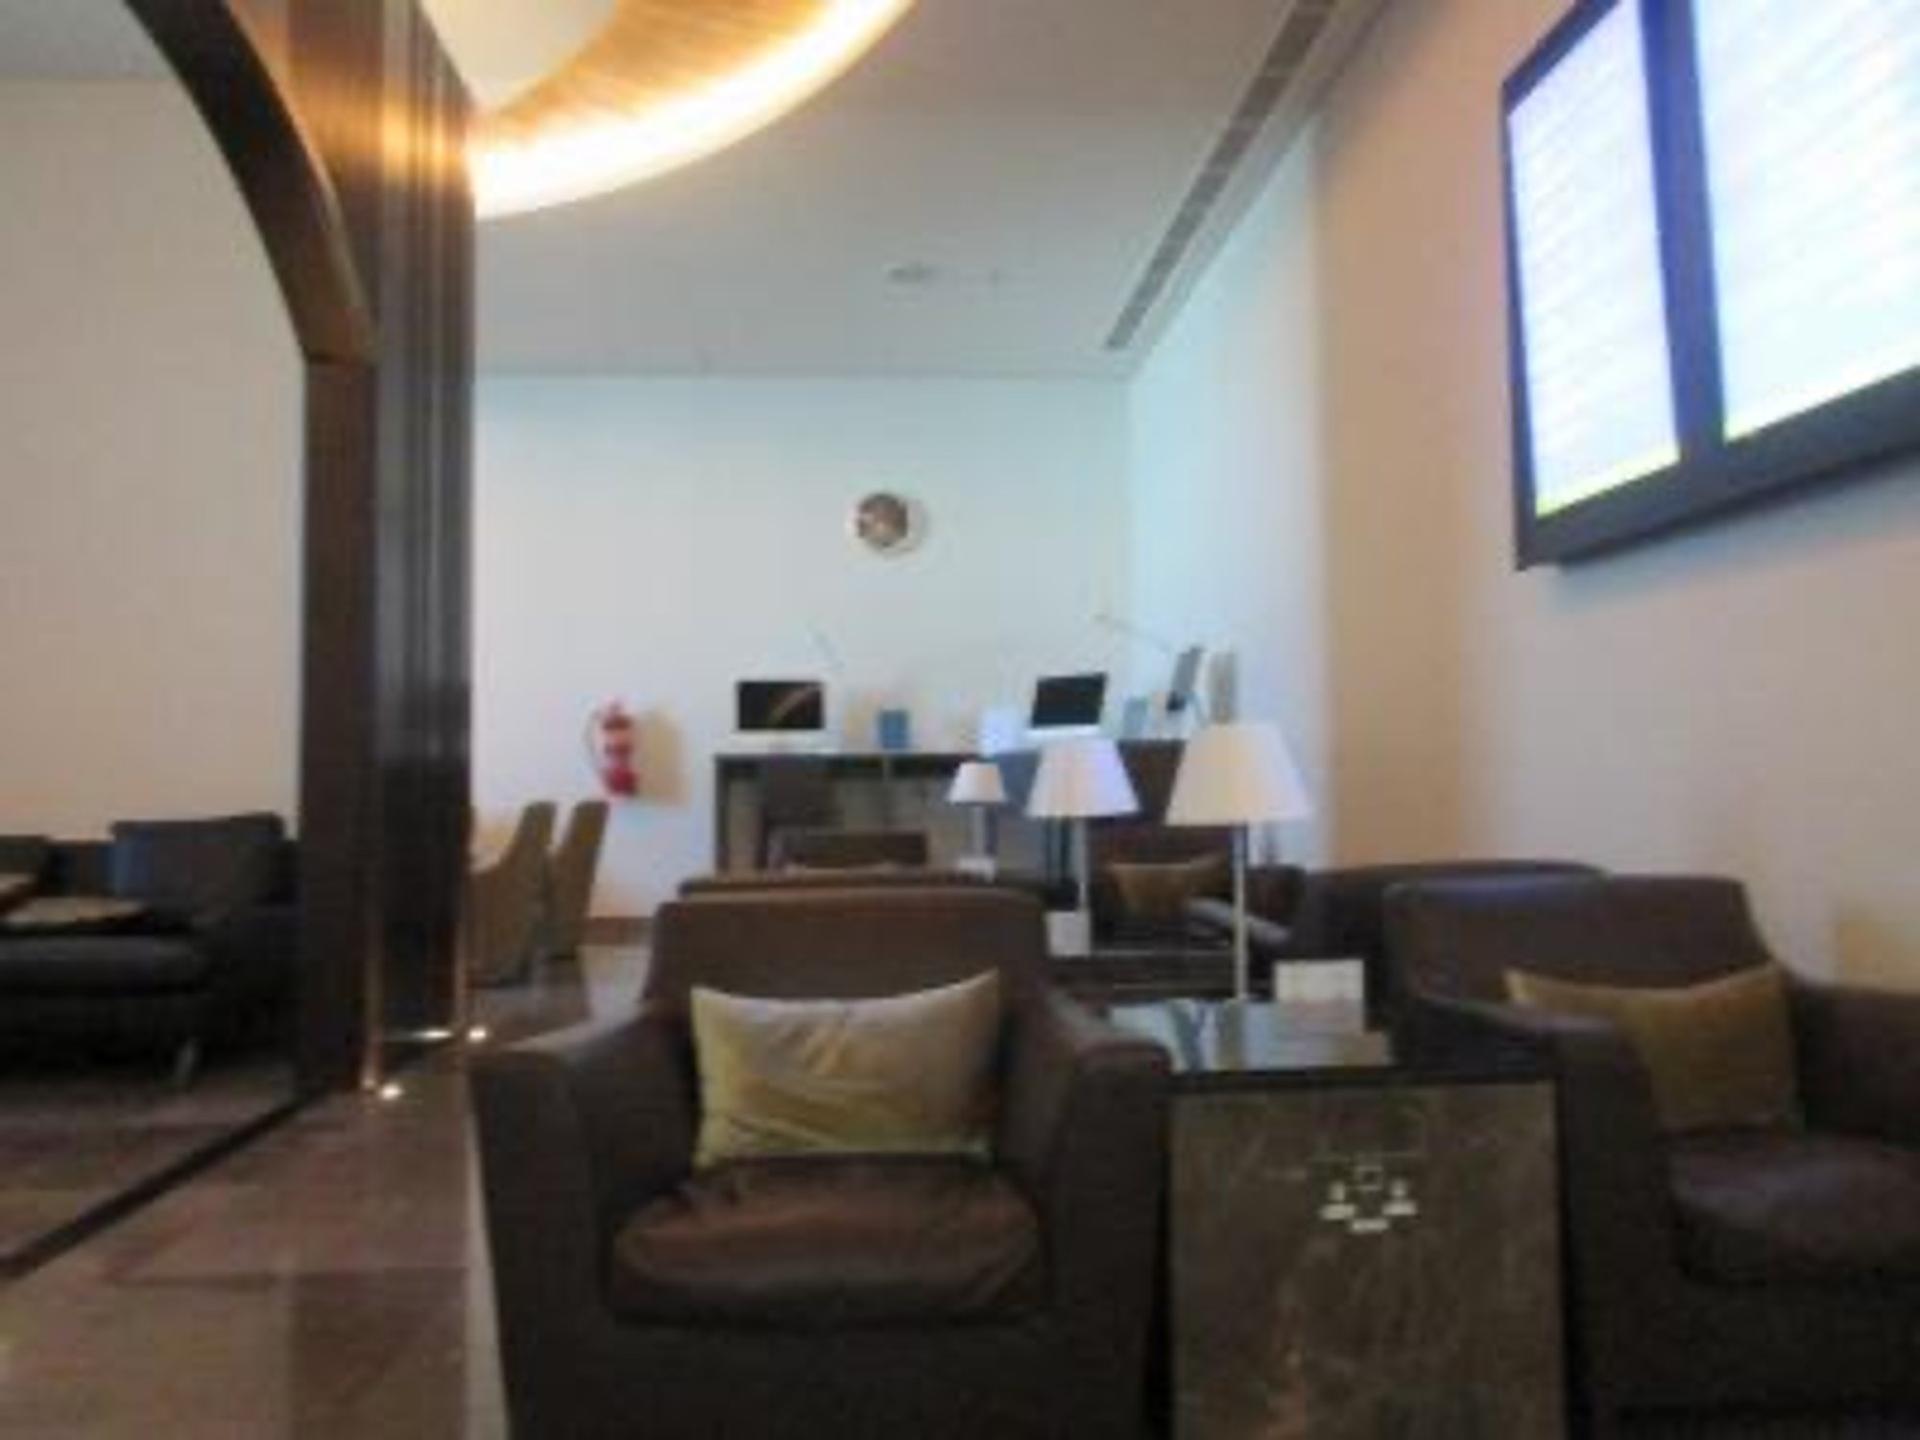 Oman Air Al Khareef Lounge image 2 of 9